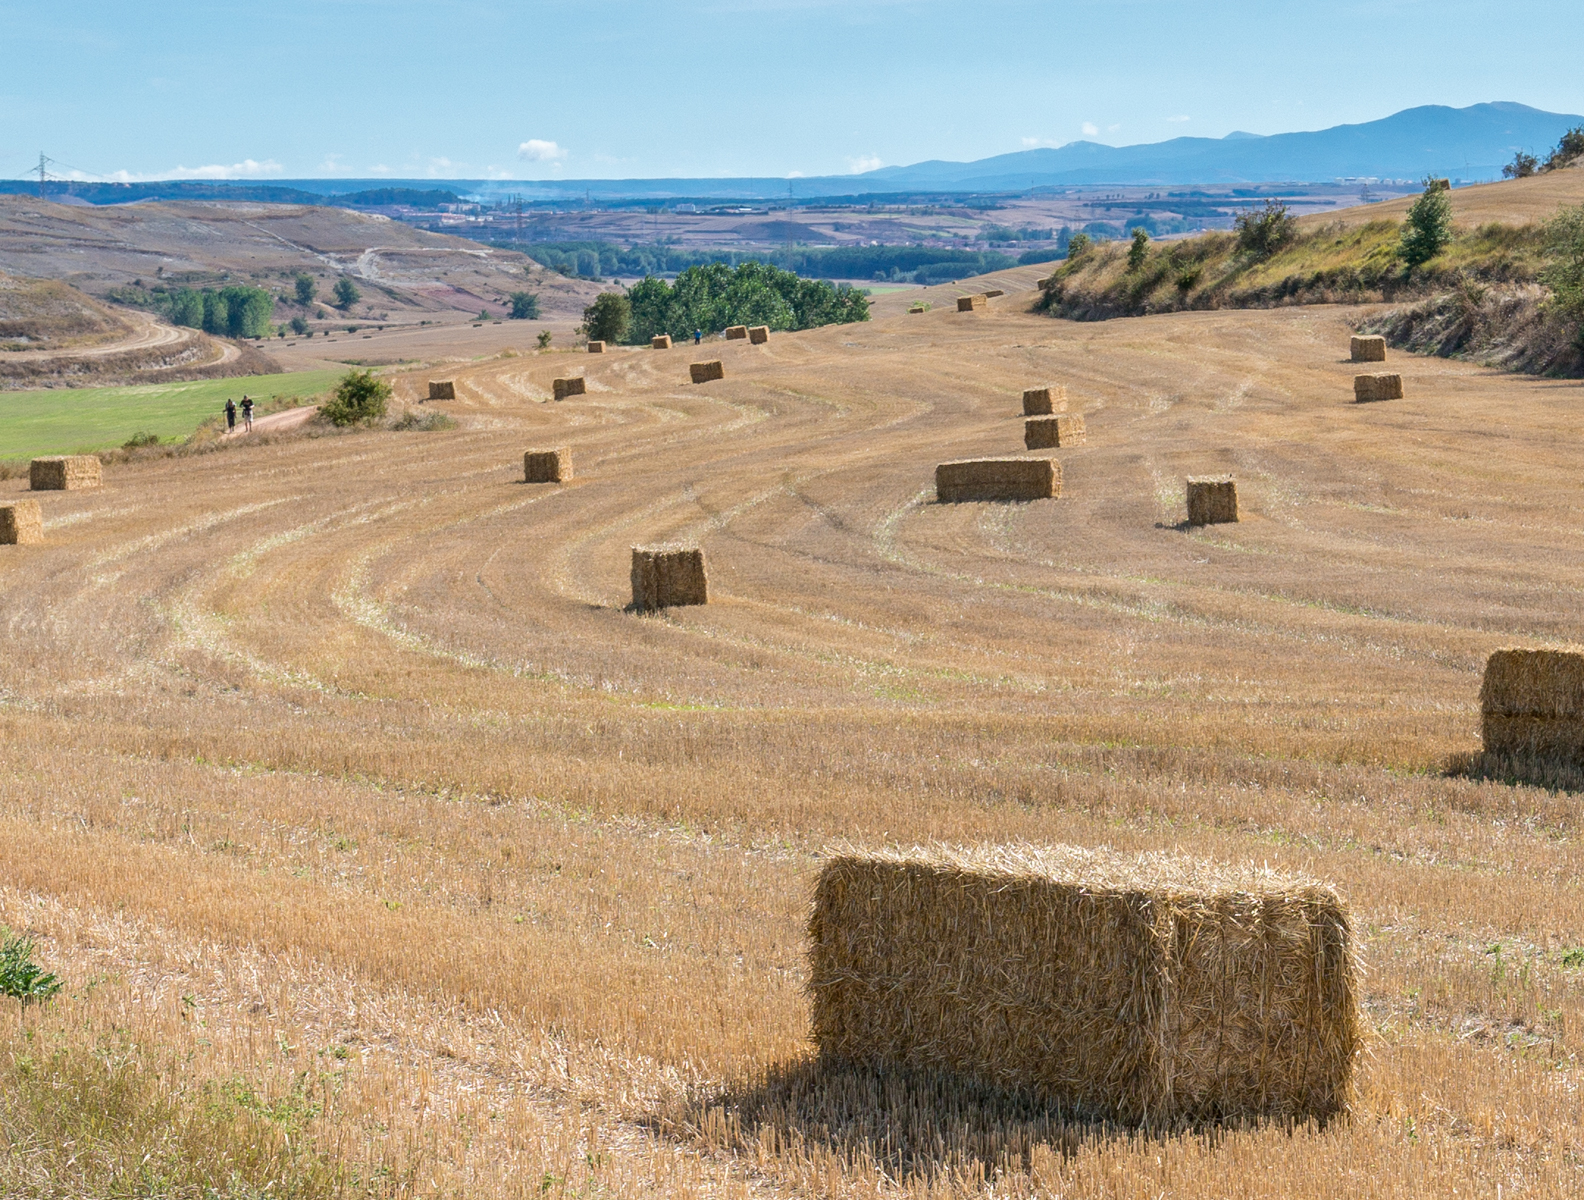 Hay bales in harvested field along the Camino Francés west of Rabé de las Calzados, Spain | Photo by Mike Hudak